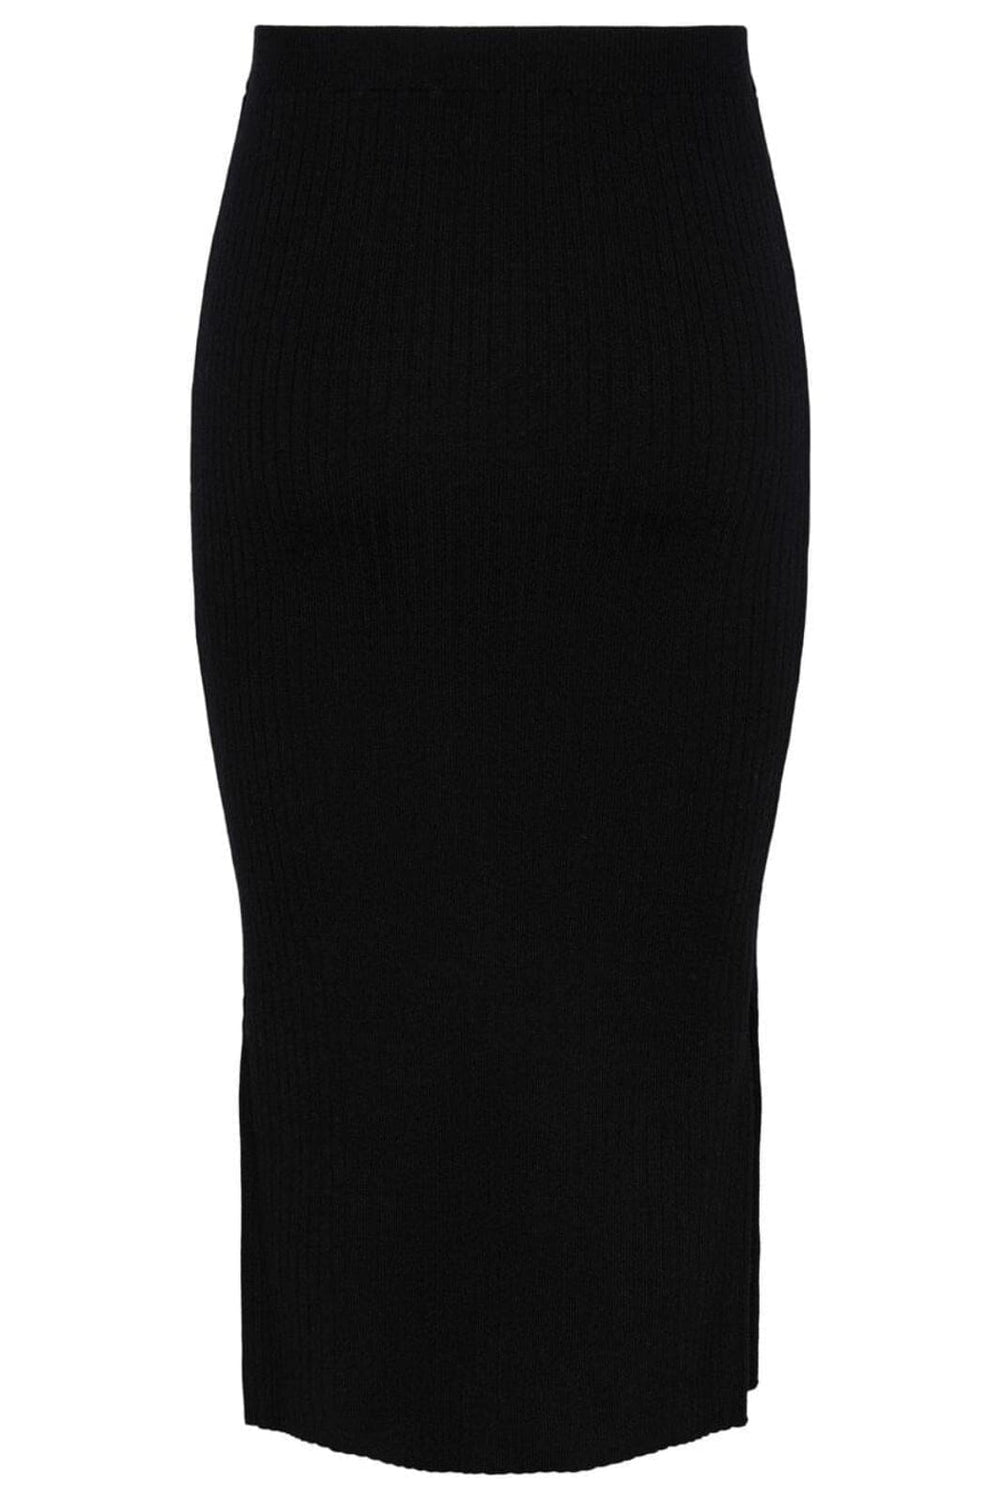 Pieces - Pccrista Midi Knit Skirt - 4350291 Black Nederdele 